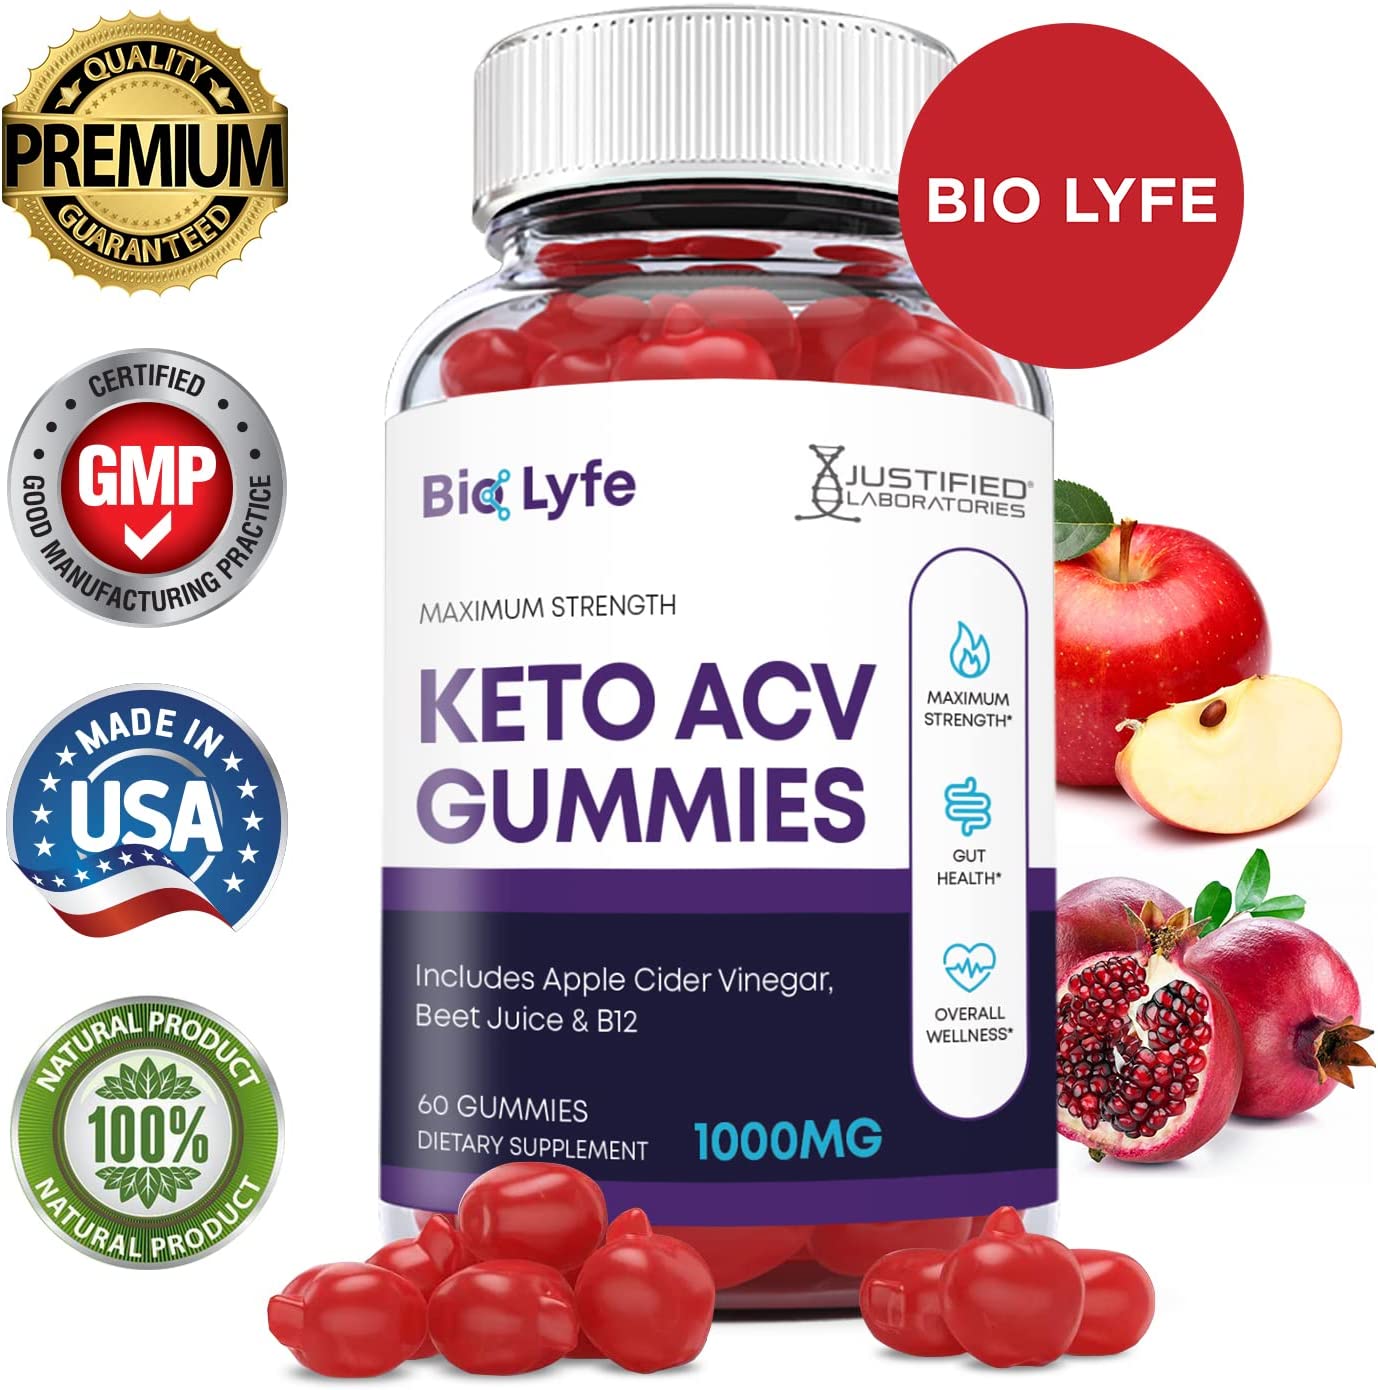 Biolyfe Keto+ACV Gummies Amazing Results within Weeks! Buy 2 Health